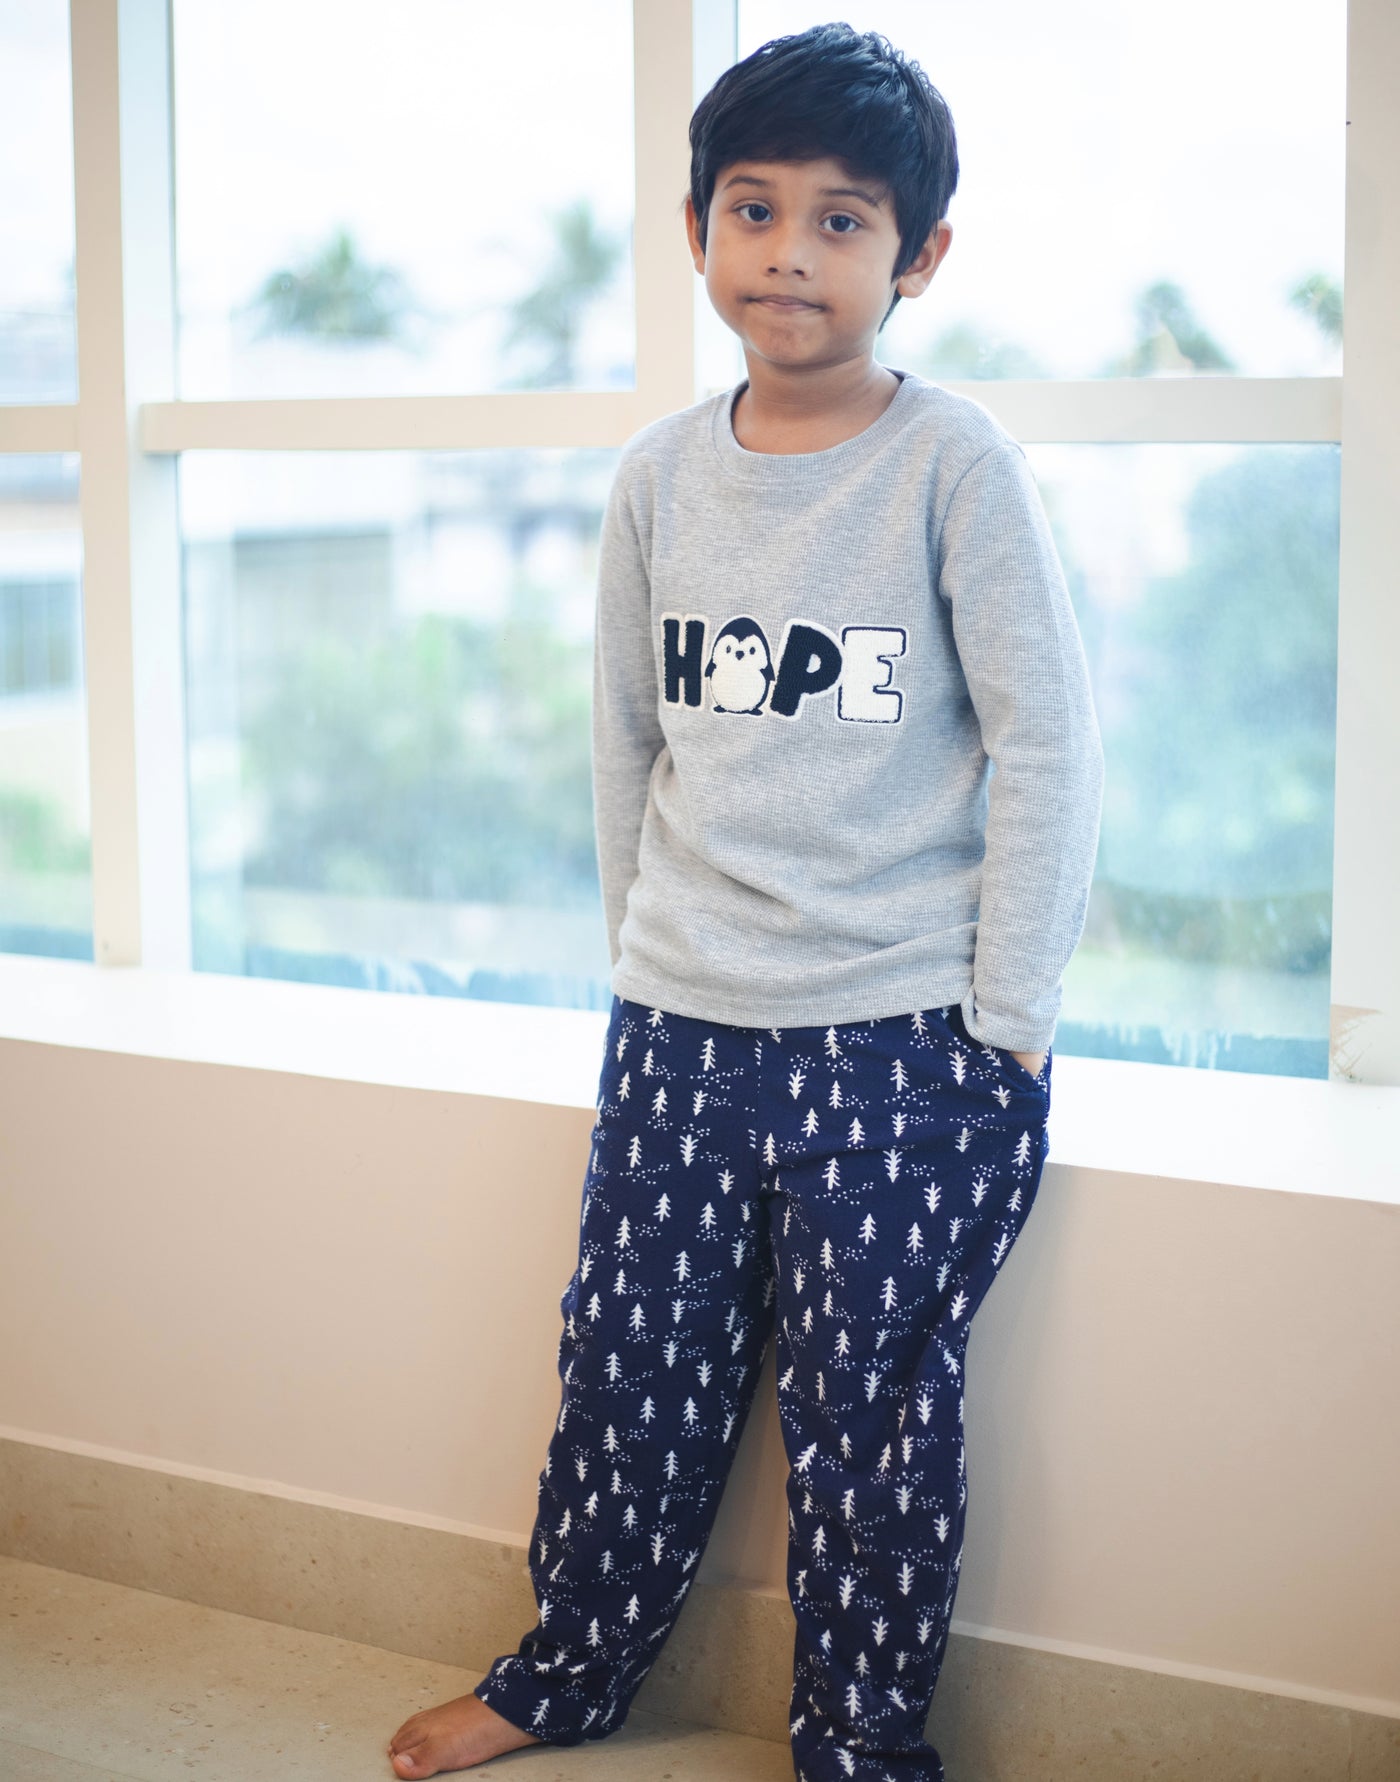 Pyjama Set for Boys-Hope